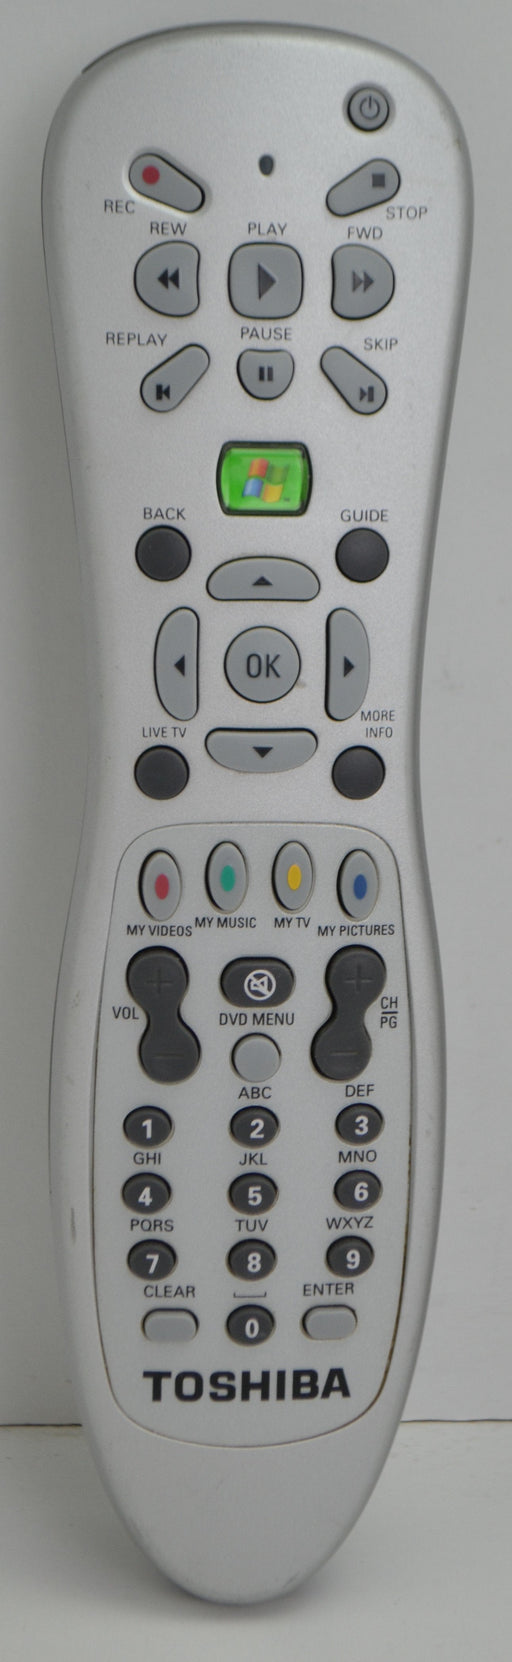 Toshiba RC1264105/00 3139 228 62581 Windows HP Media Remote Control-Remote-SpenCertified-refurbished-vintage-electonics